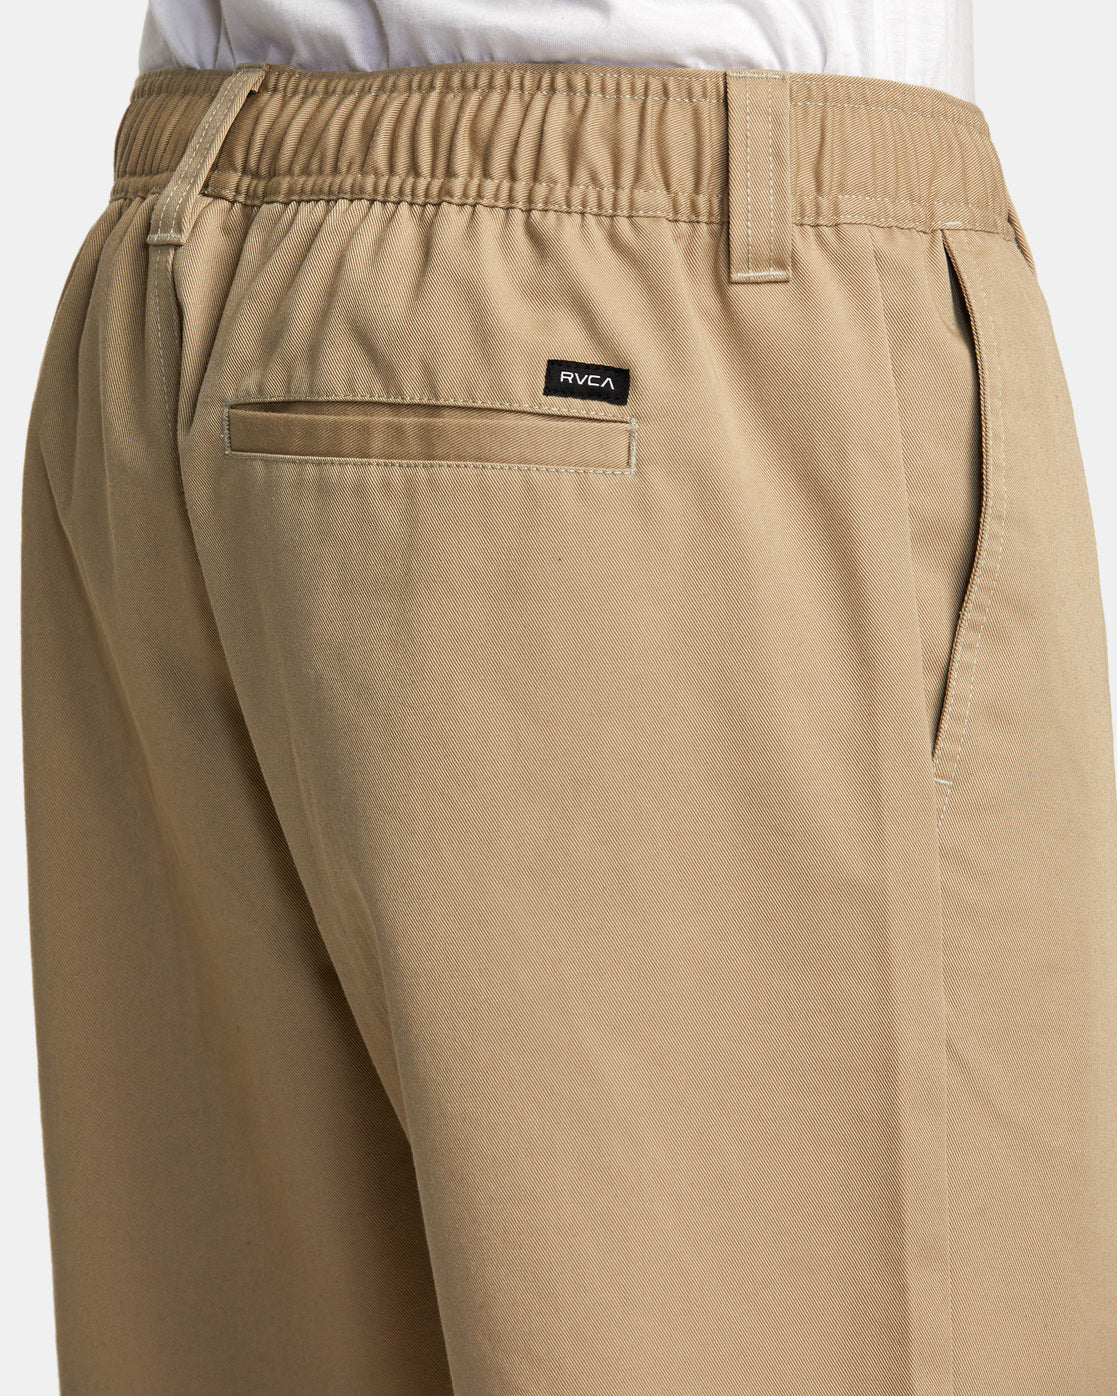 RVCA Recession Collection Americana Elasticized Pants Khaki / Medium